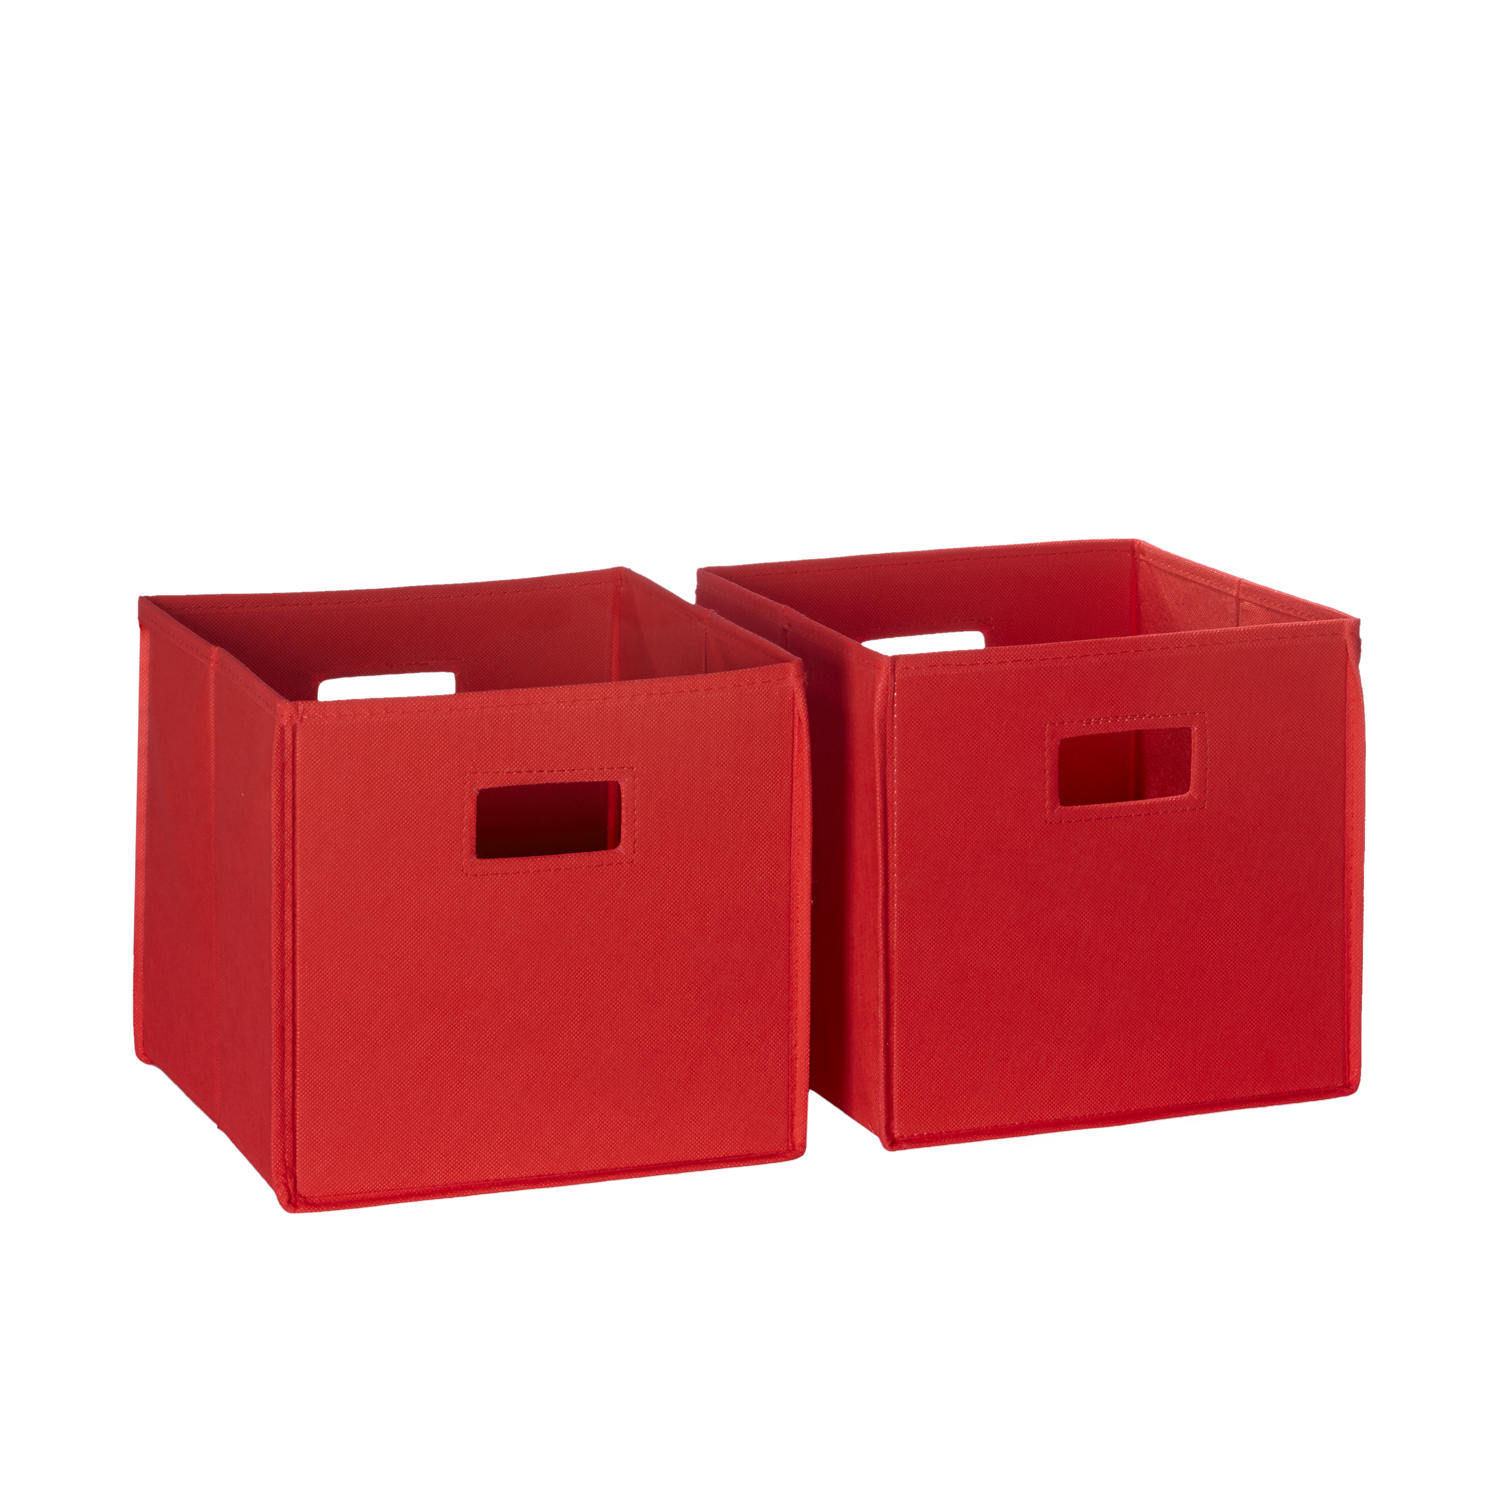 RiverRidge Home Folding Fabric Cube Storage Bin Set of 2 - Red - image 1 of 11